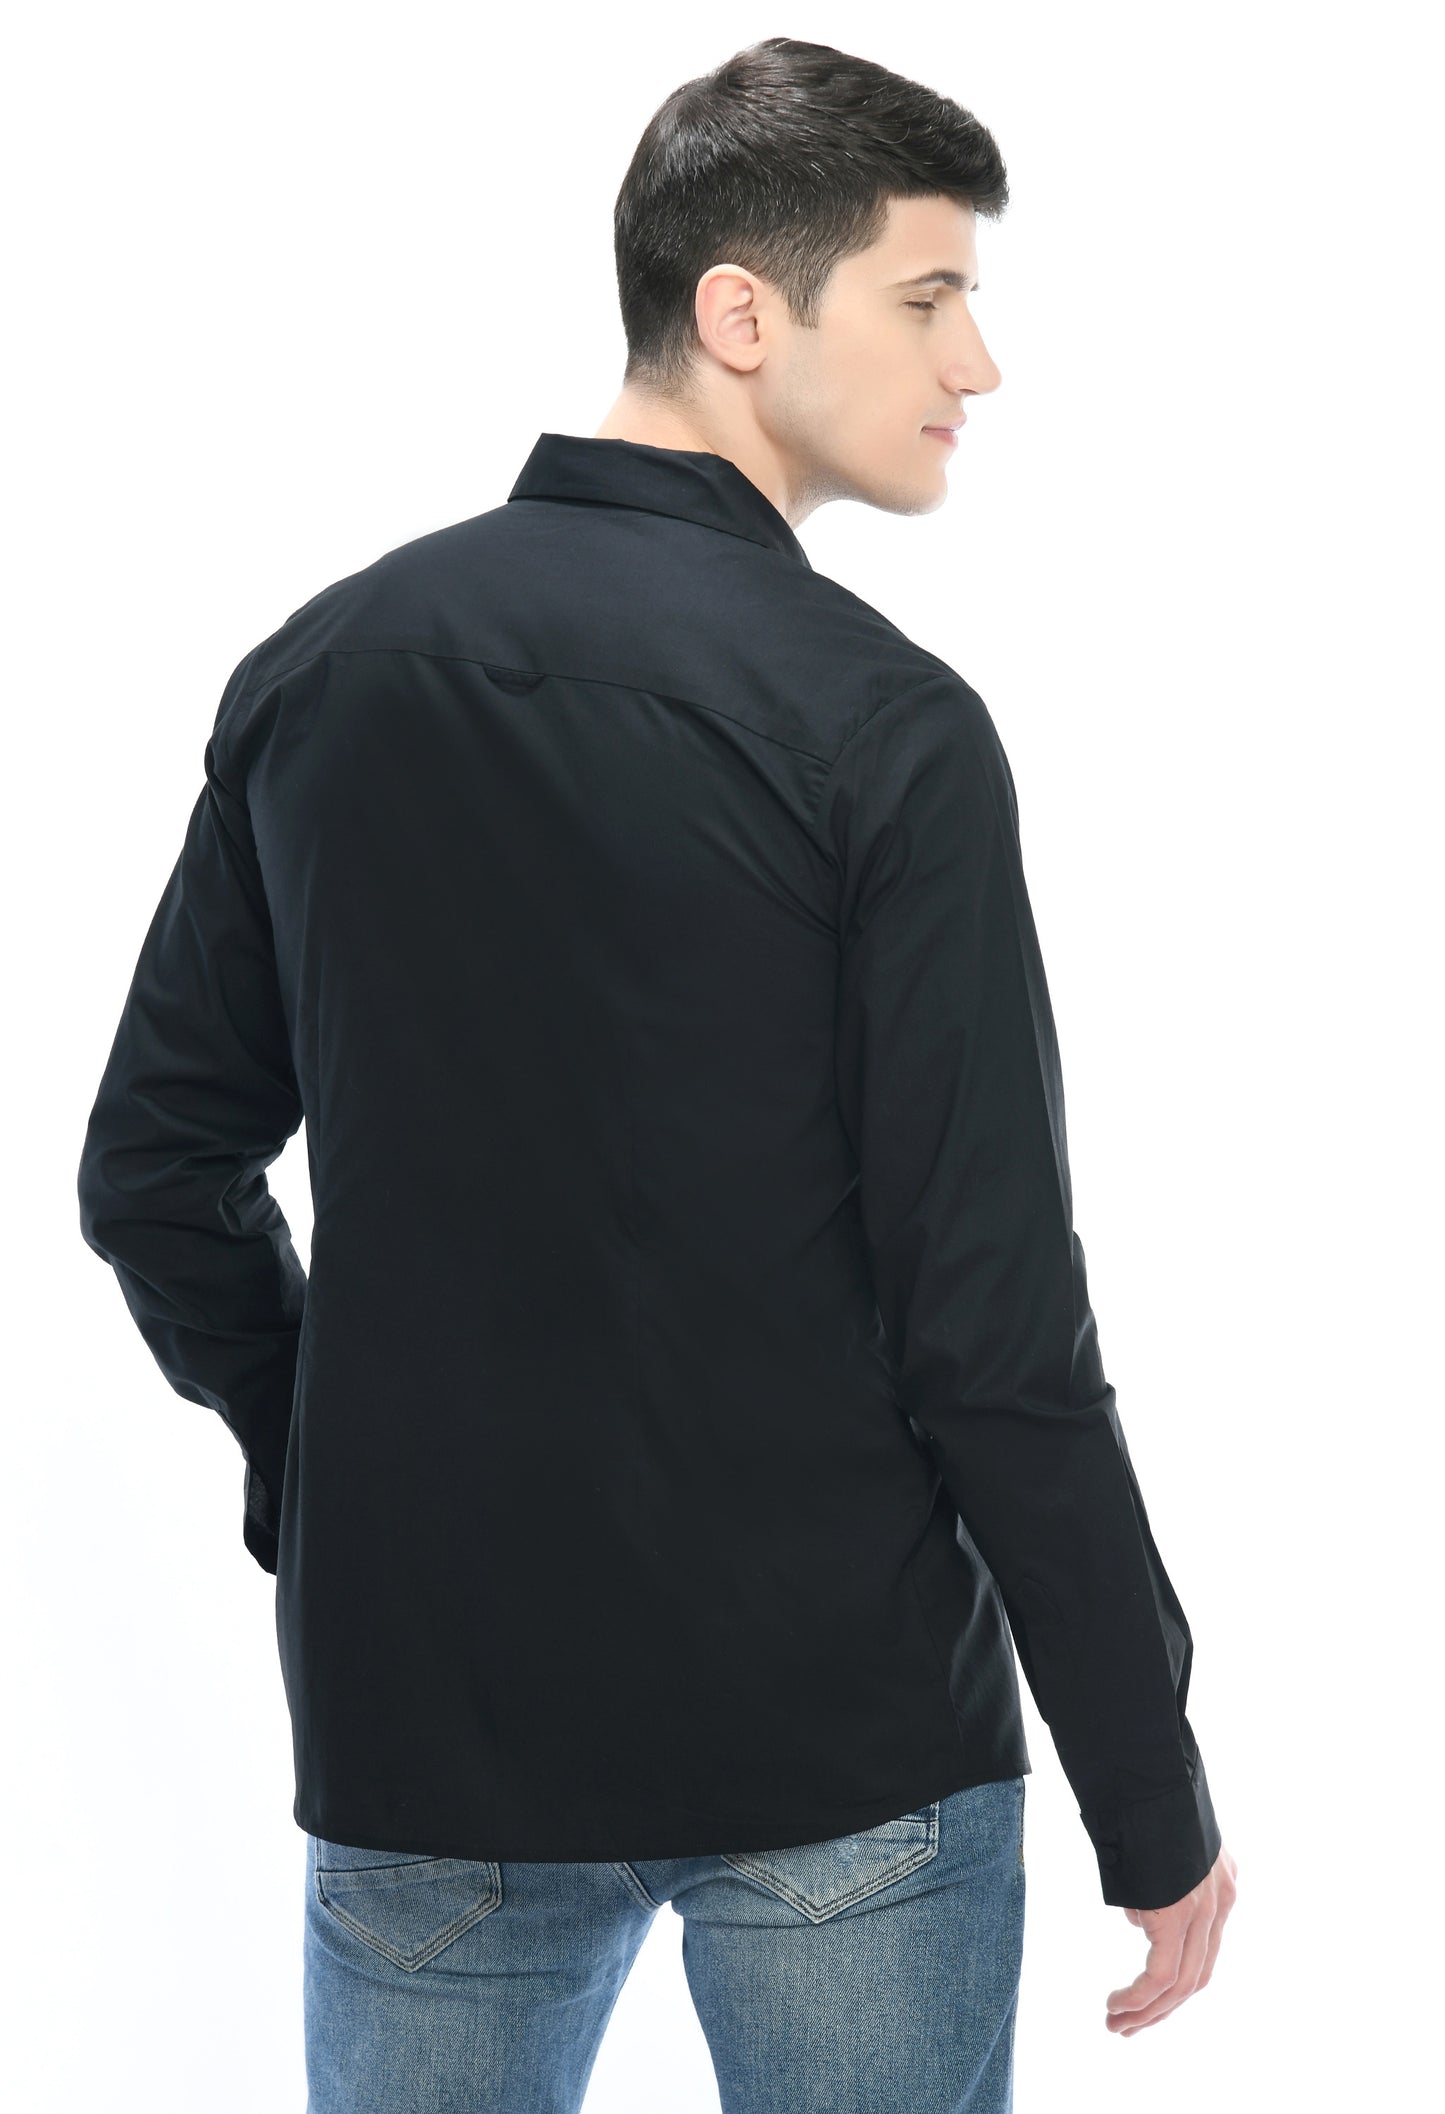 A black cotton shirt showcasing pintex around the neck.